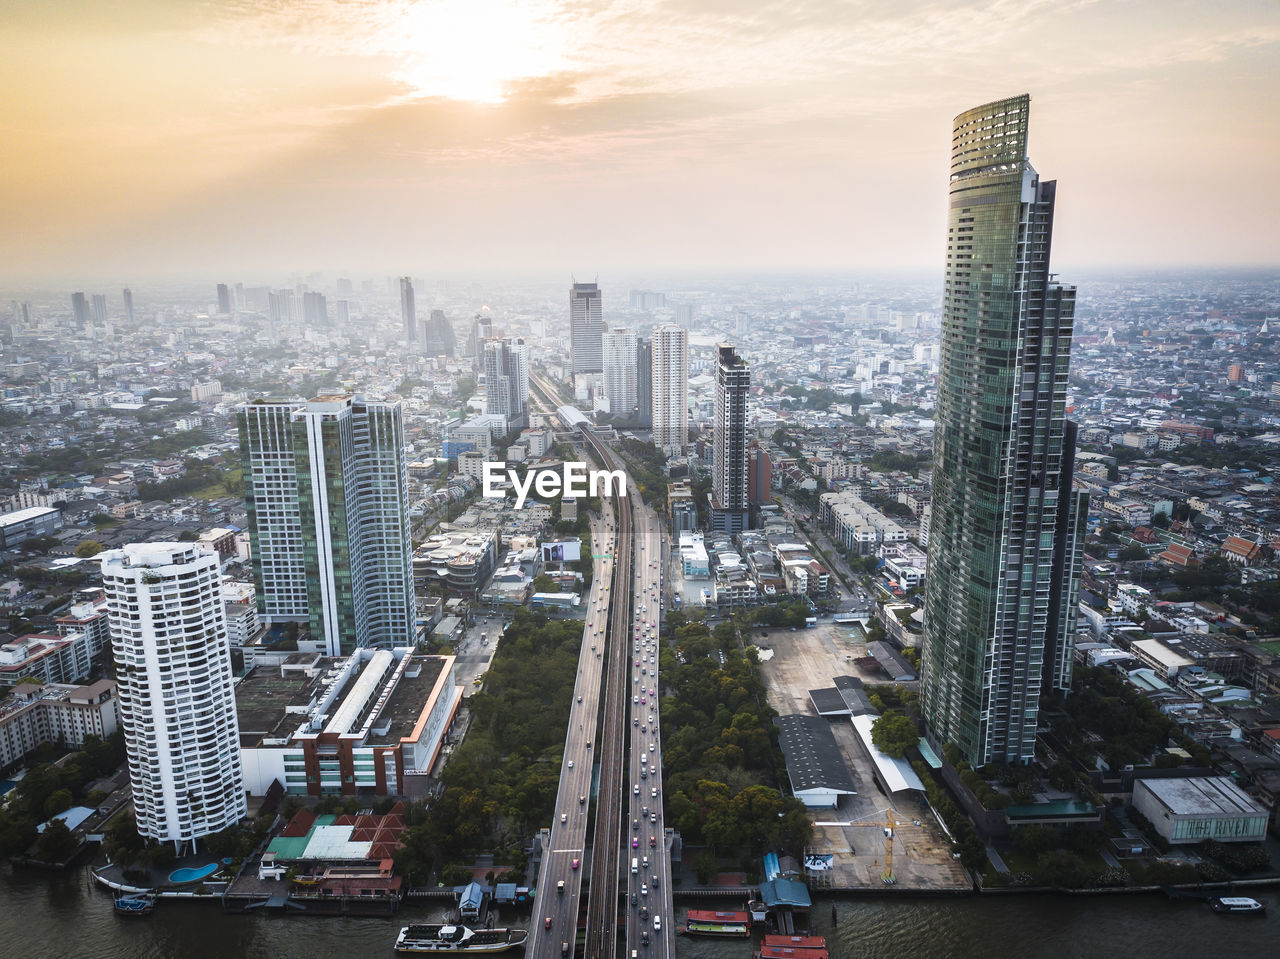 Drone aerial photograph of bangkok, capital of thailand.